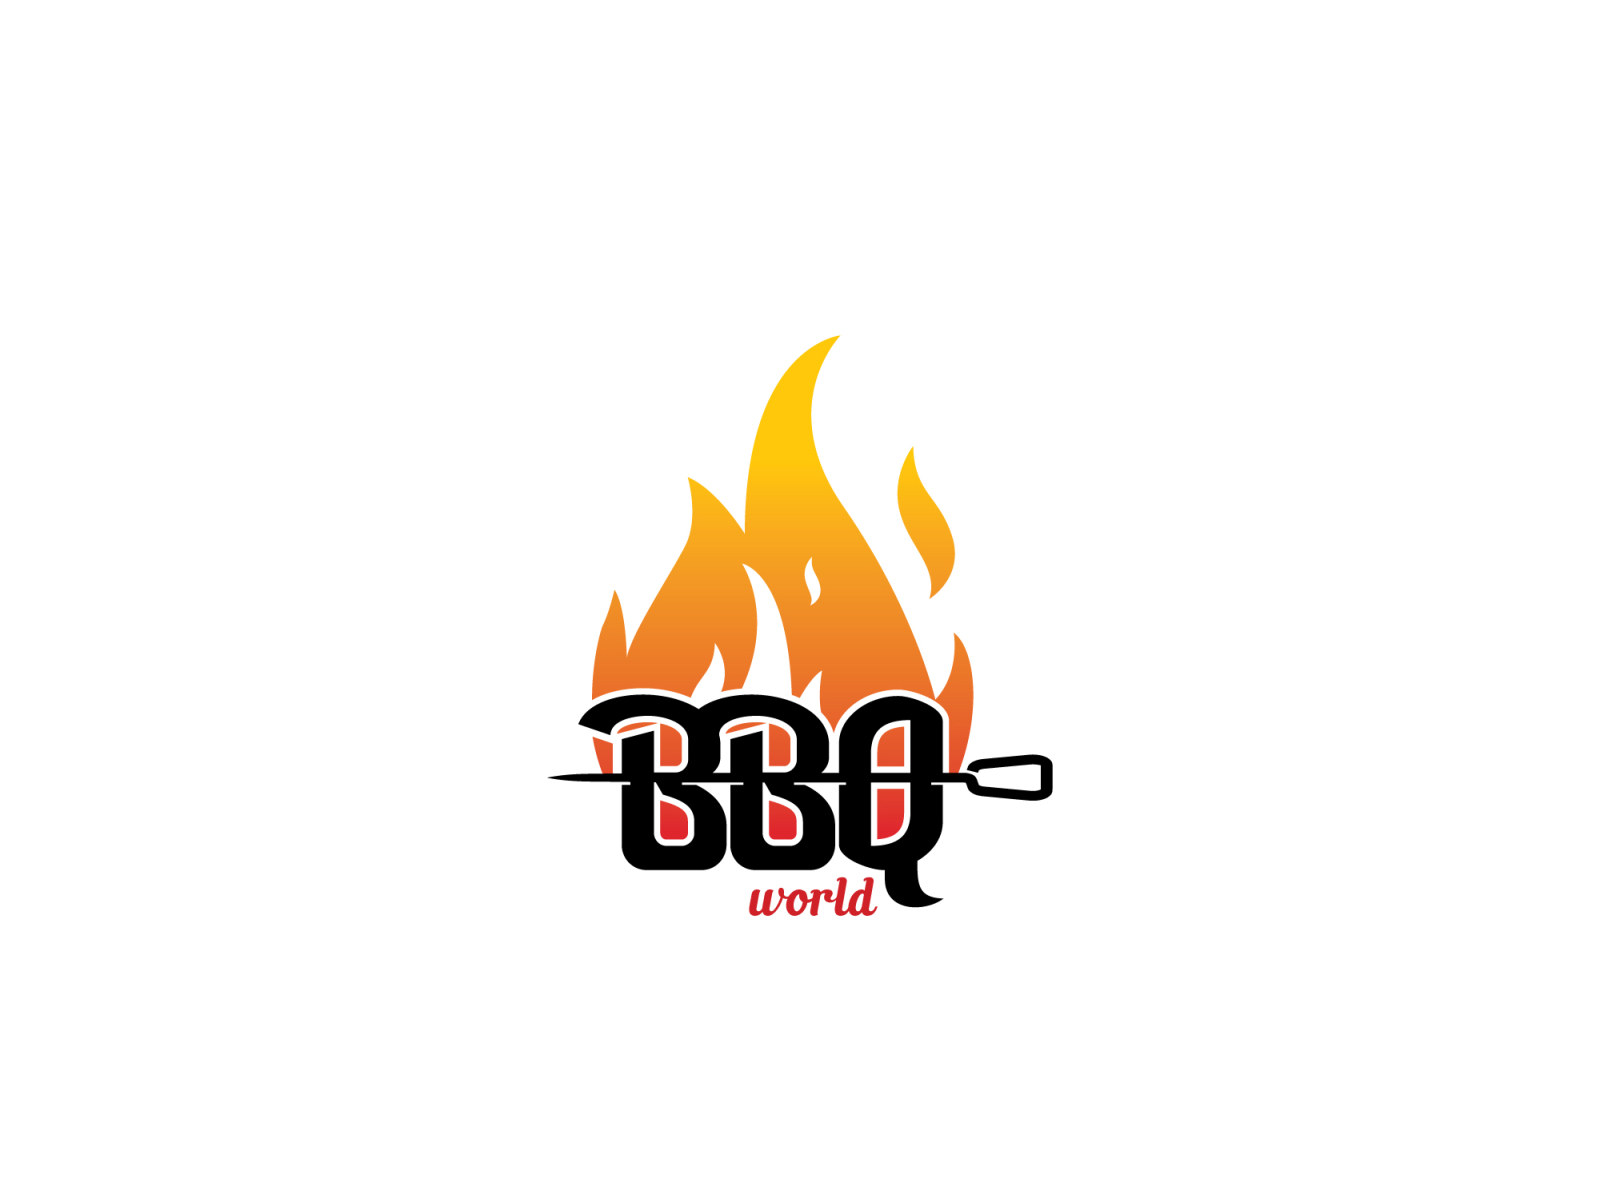 BBQ logo by MD NOZIBUL GONI on Dribbble